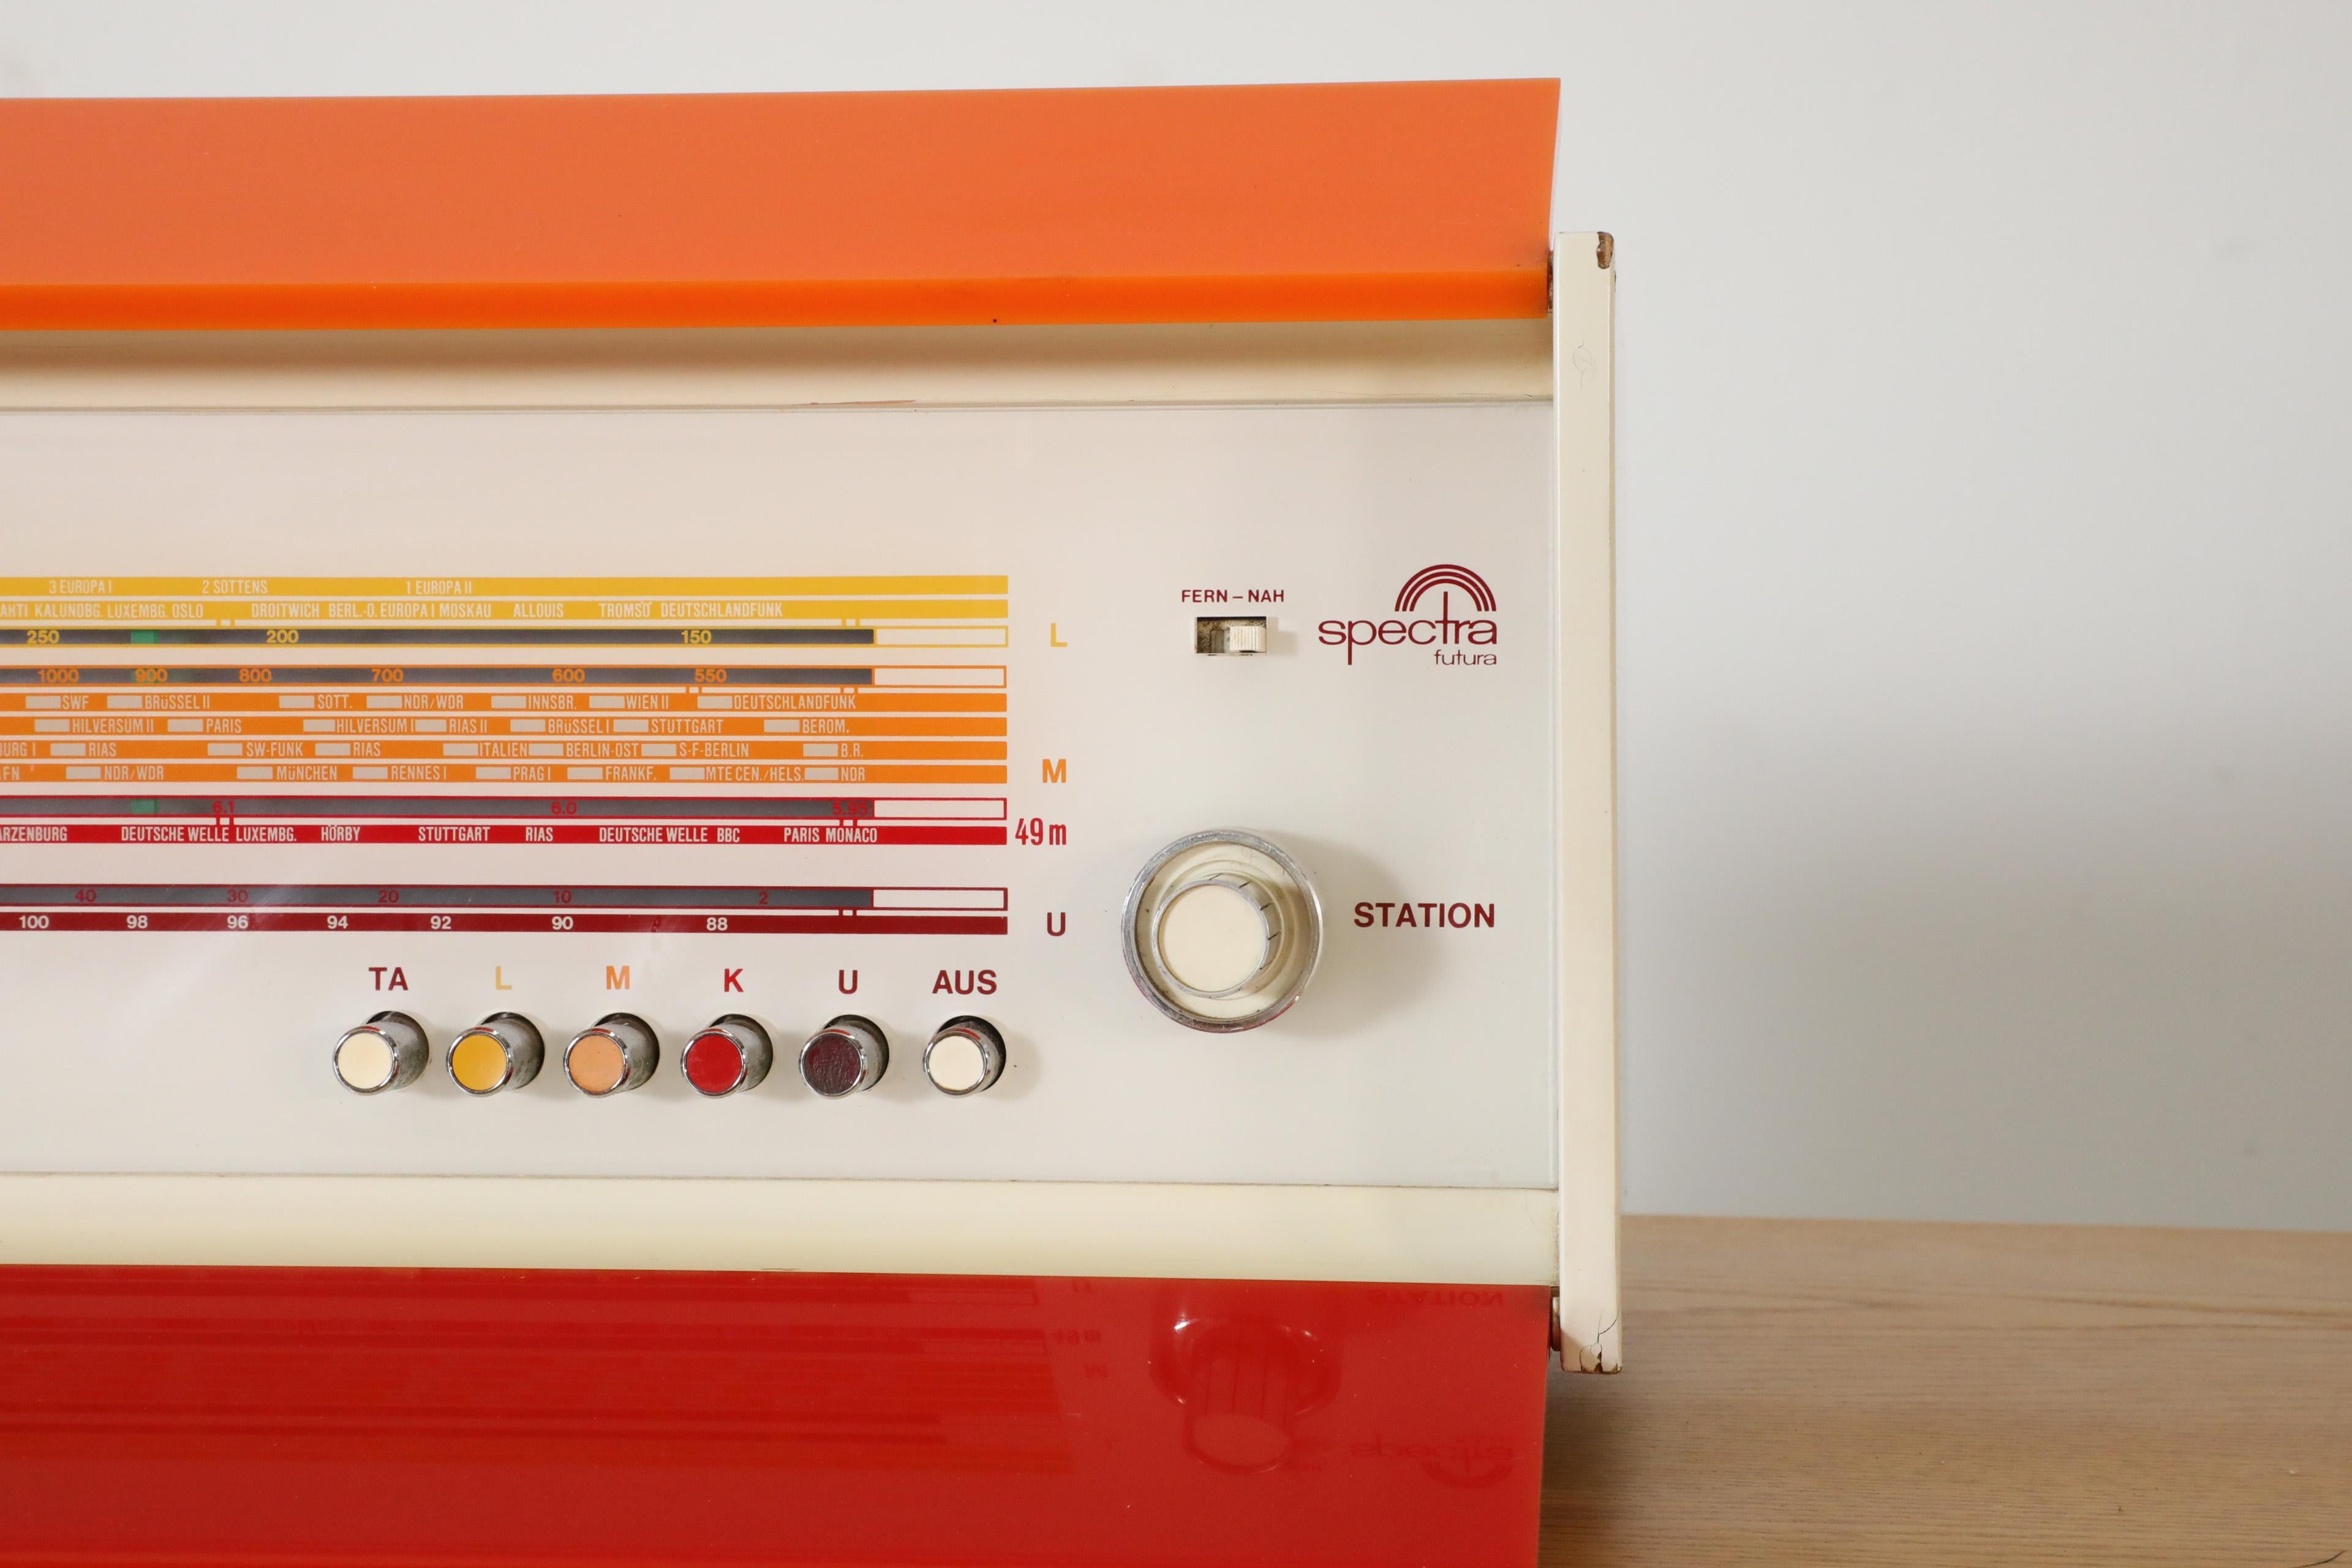 Raymond Loewy Designed Nordmende Spectra Futura Transistor Radio in Red & Orange For Sale 3